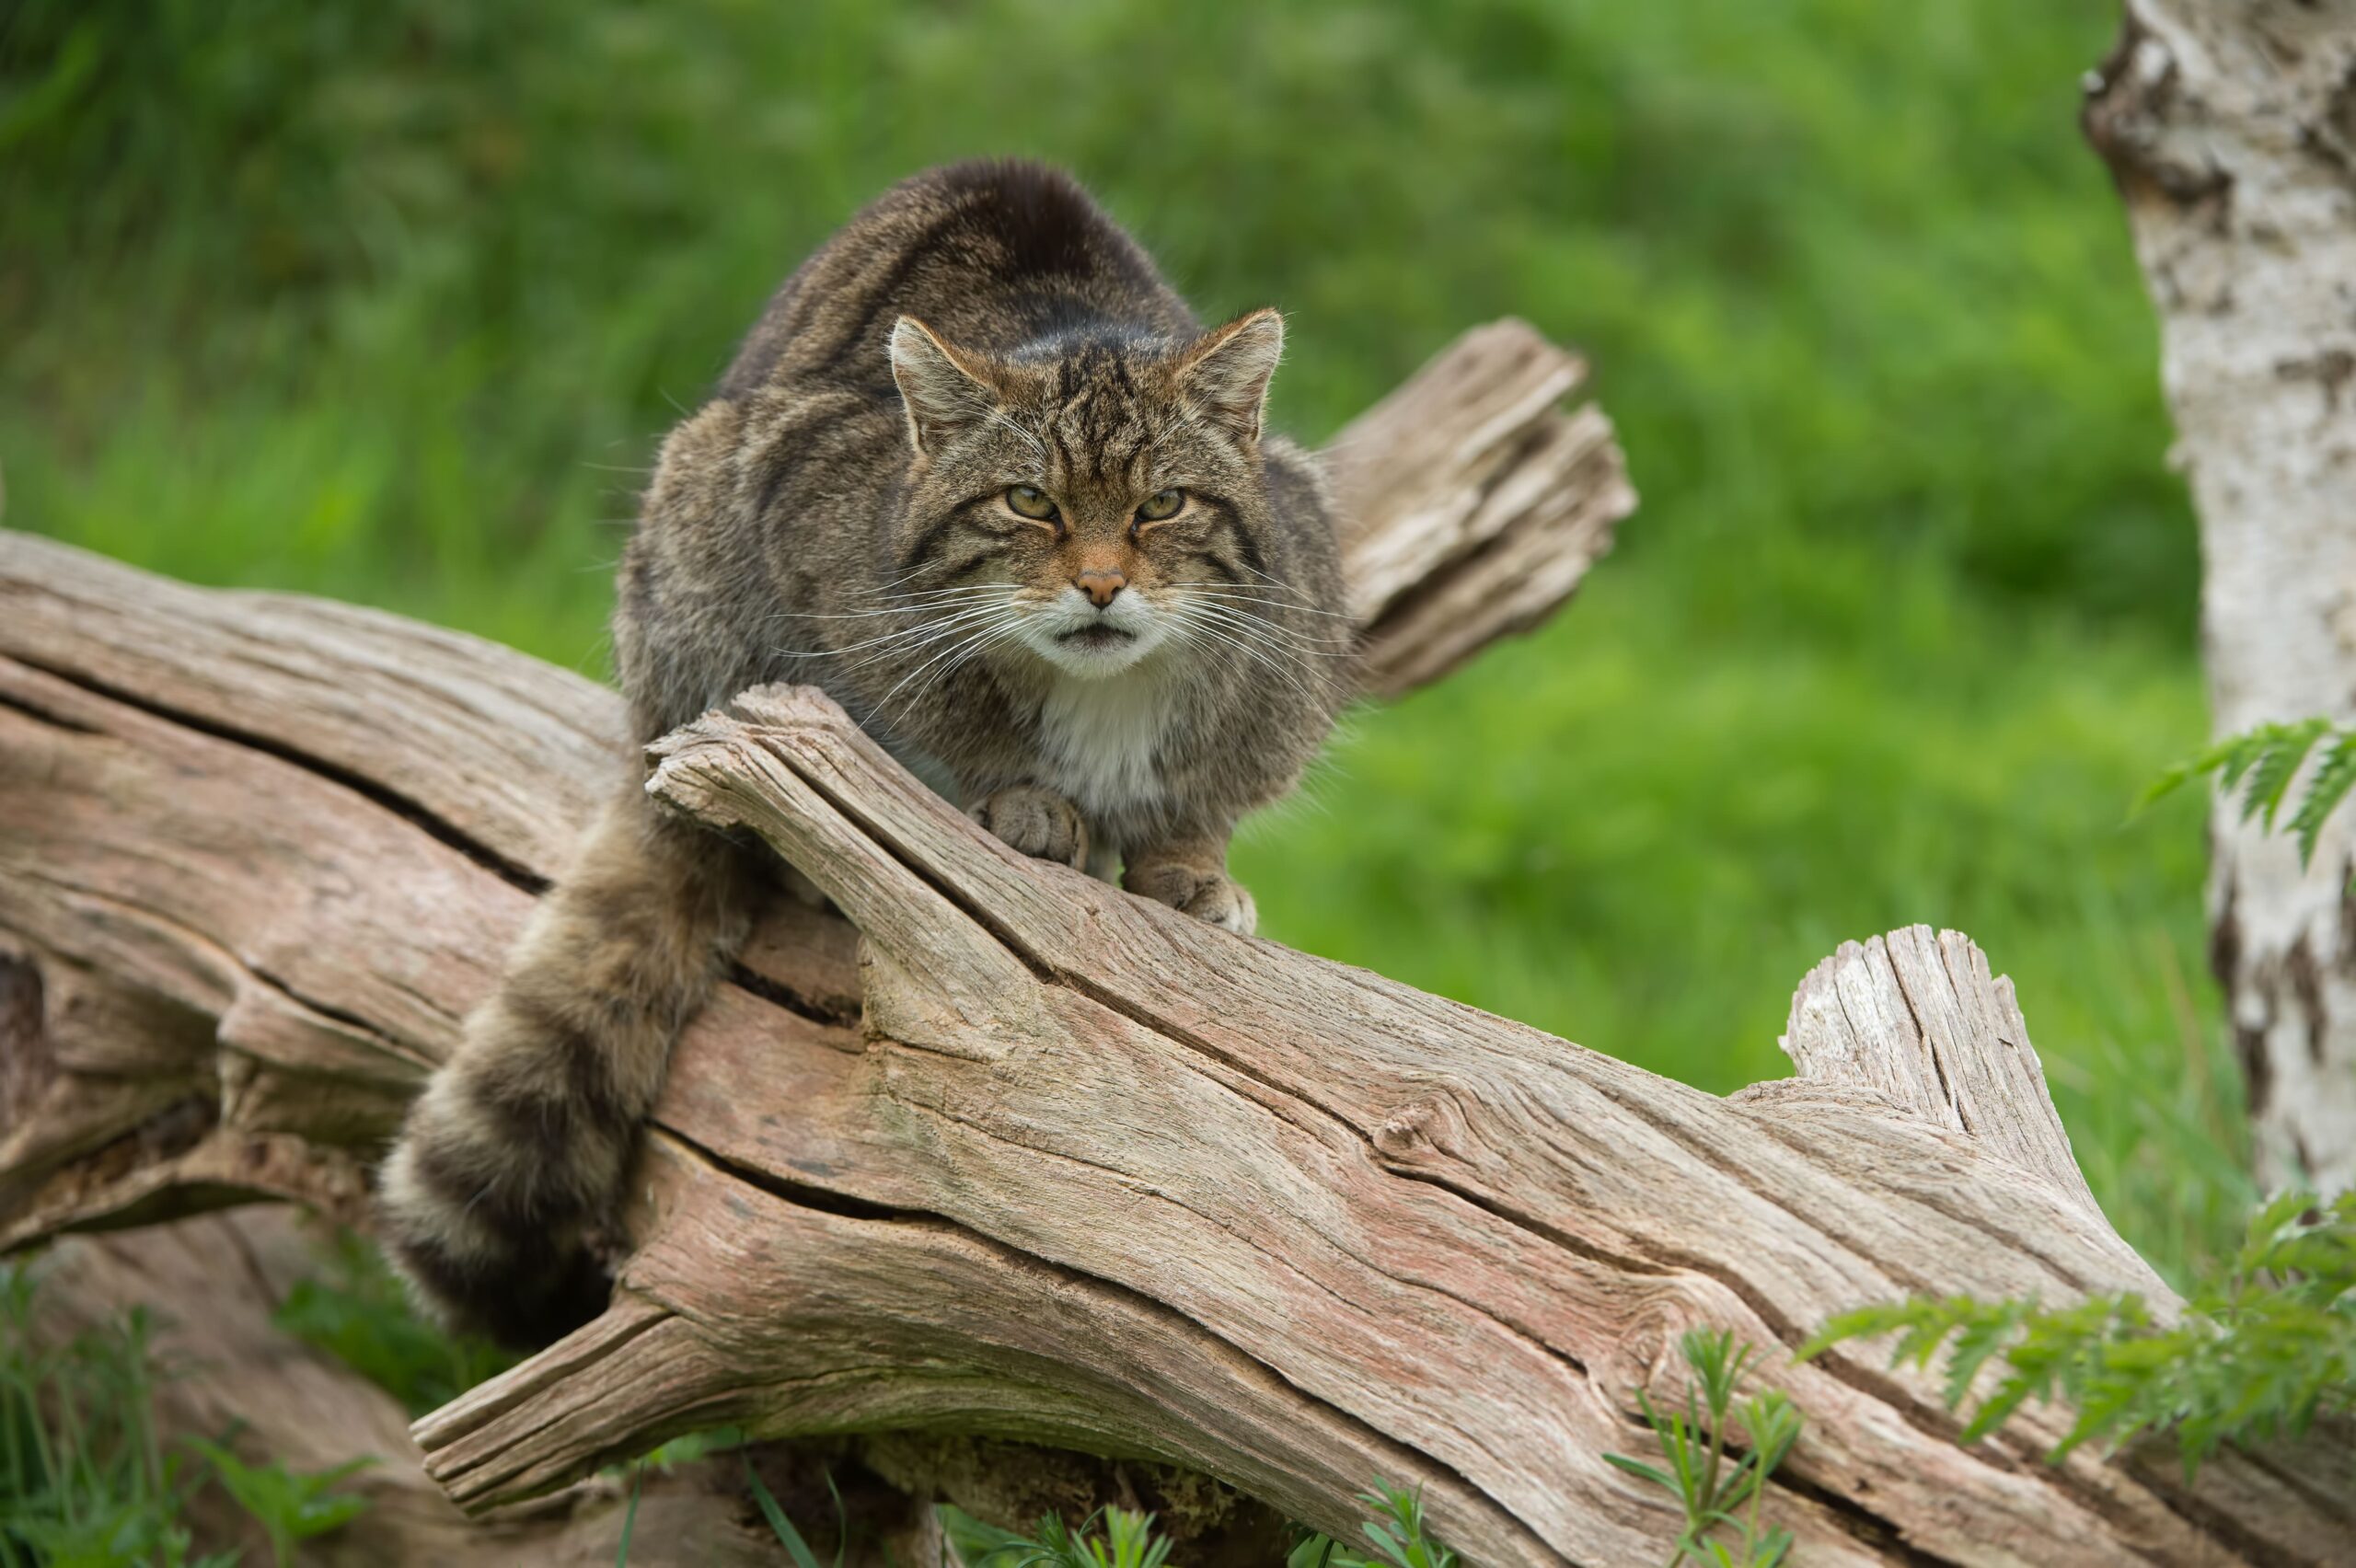 scottish wildcat on log